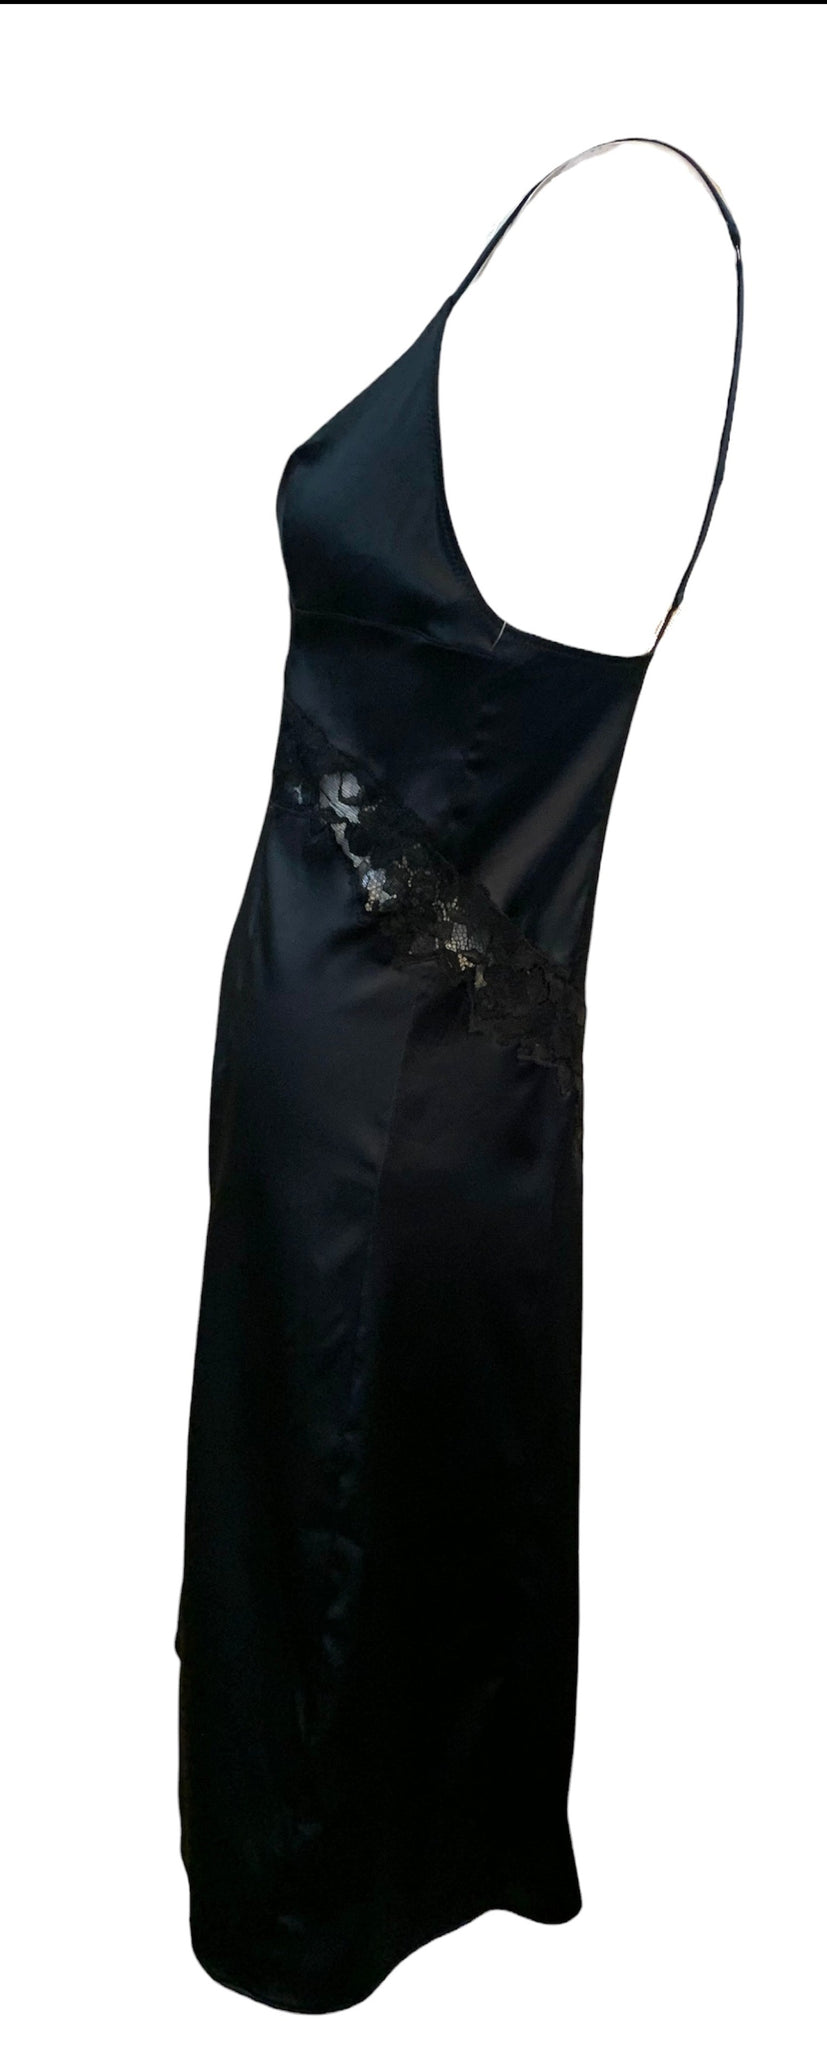    Dolce and Gabbana 90s Black Stretch Slip Dress SIDE 2 of 5